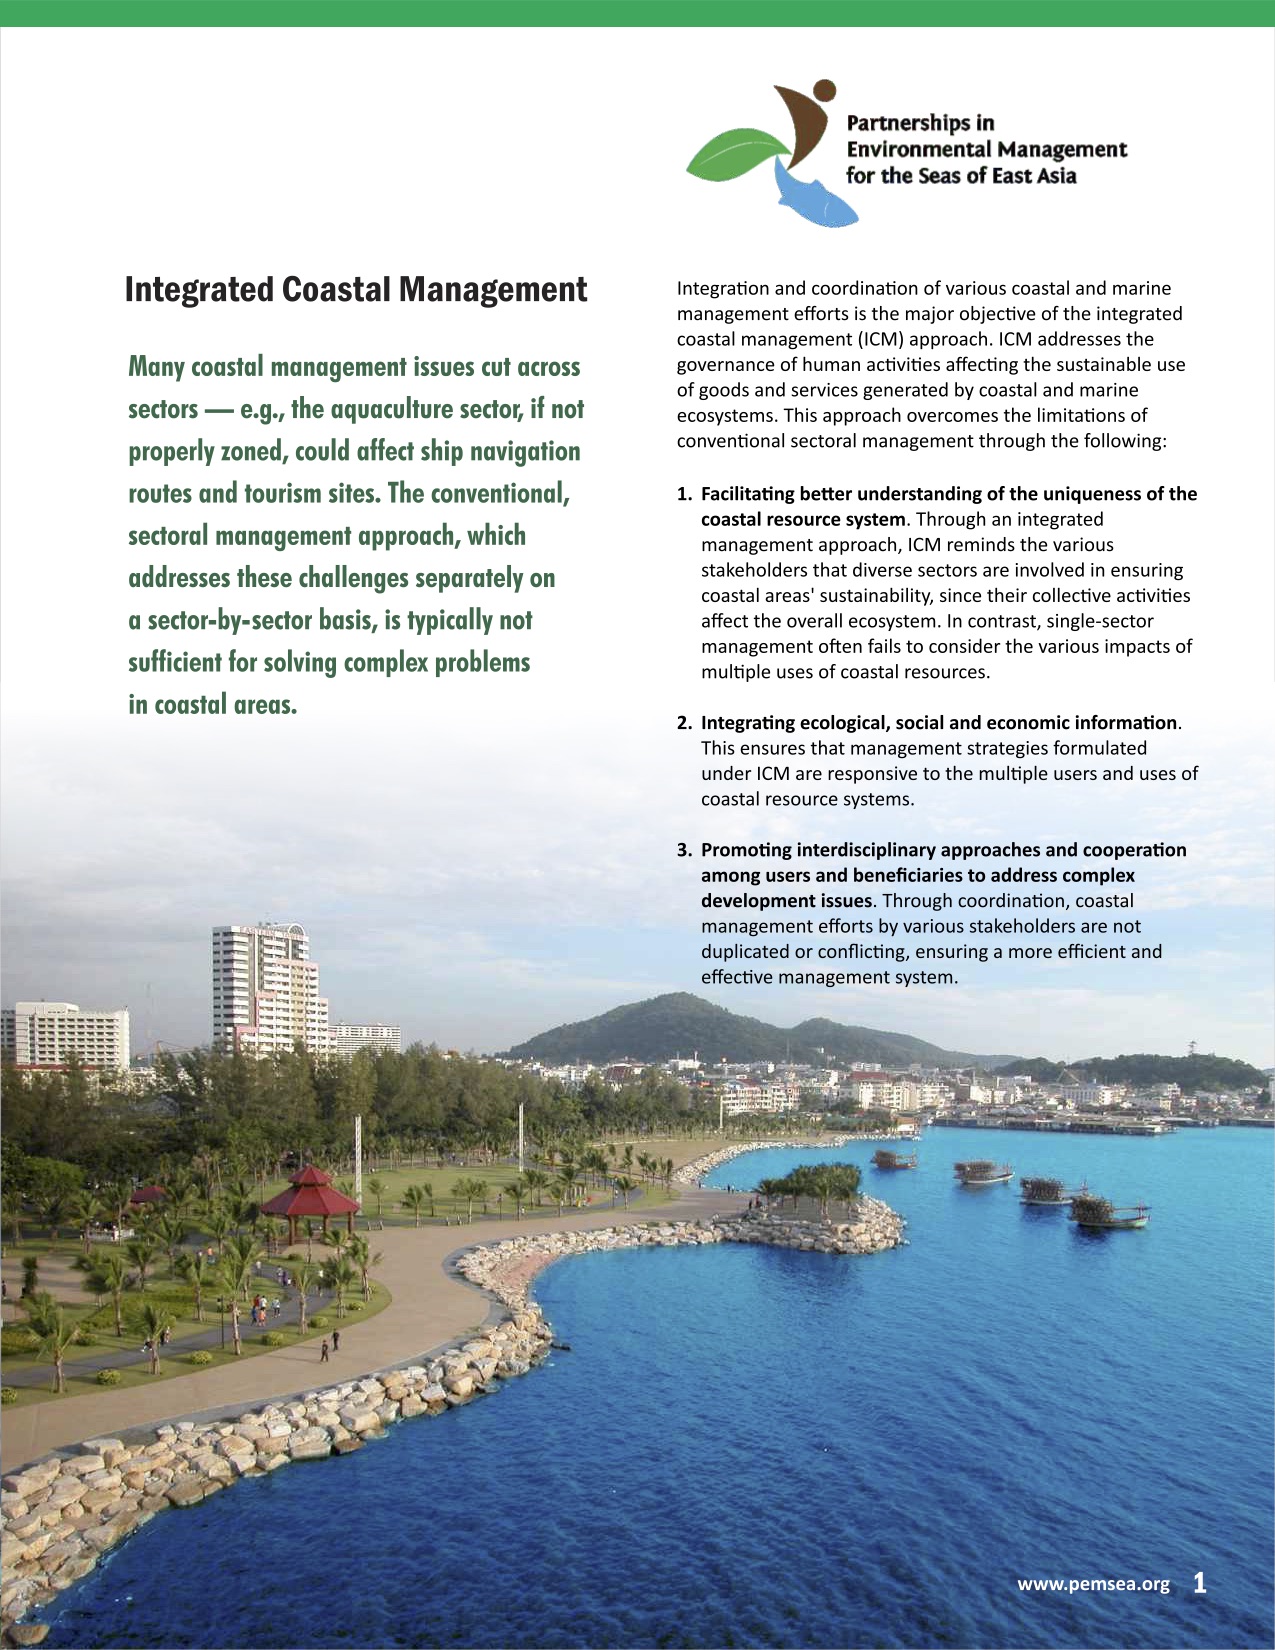 Integrated Coastal Management [Brochure, 2015]